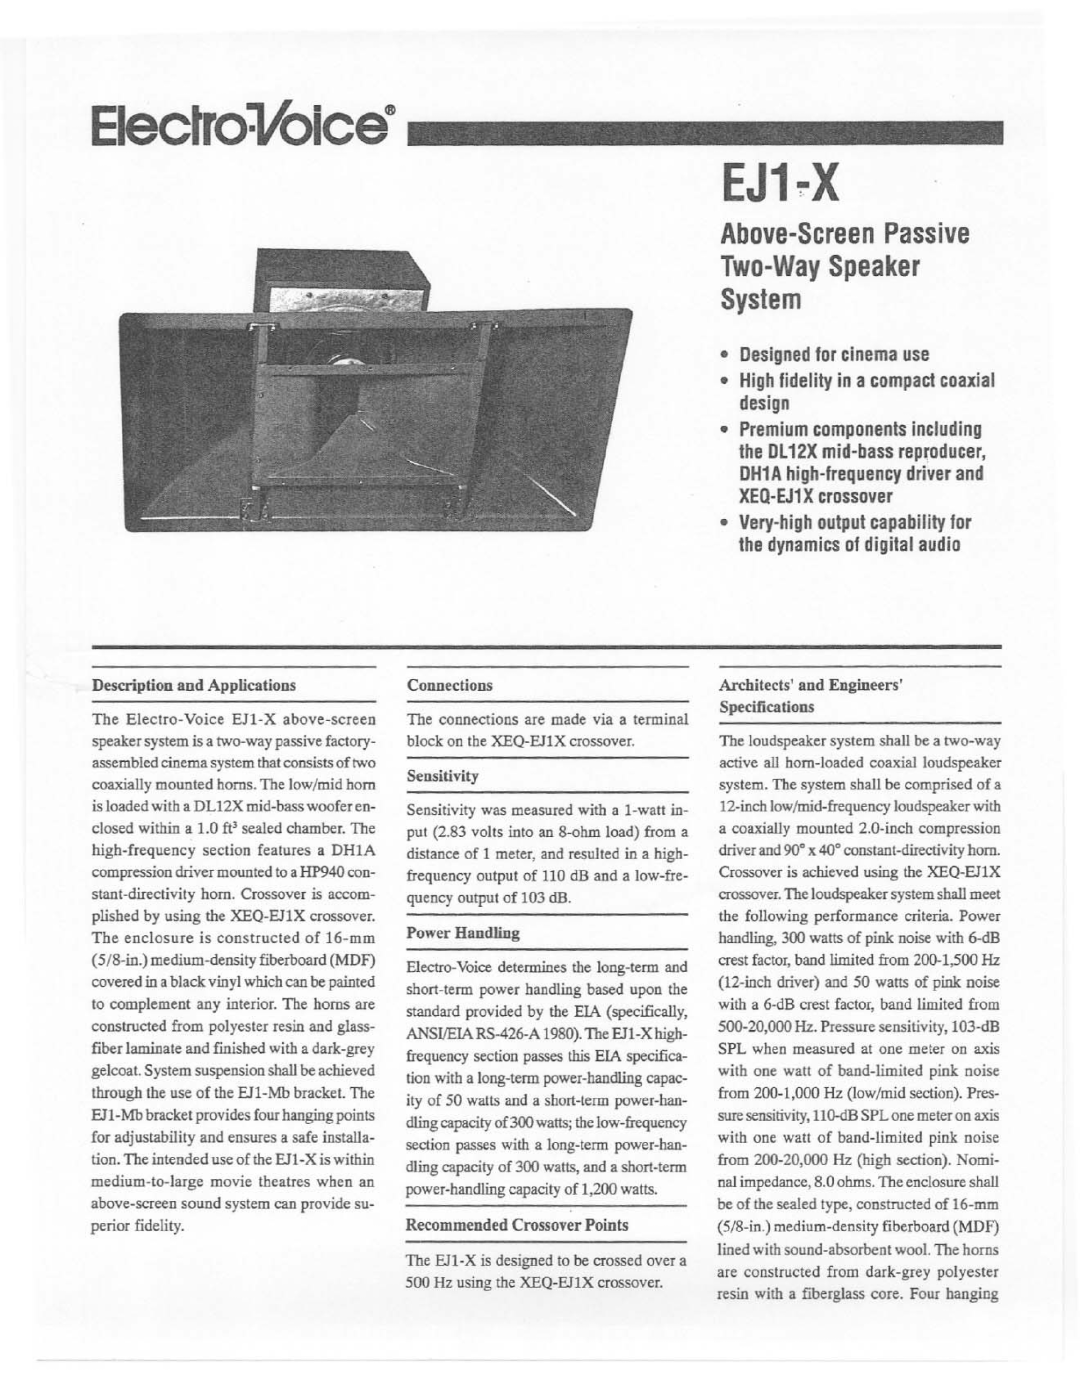 Electro-Voice EJ1-X manual 